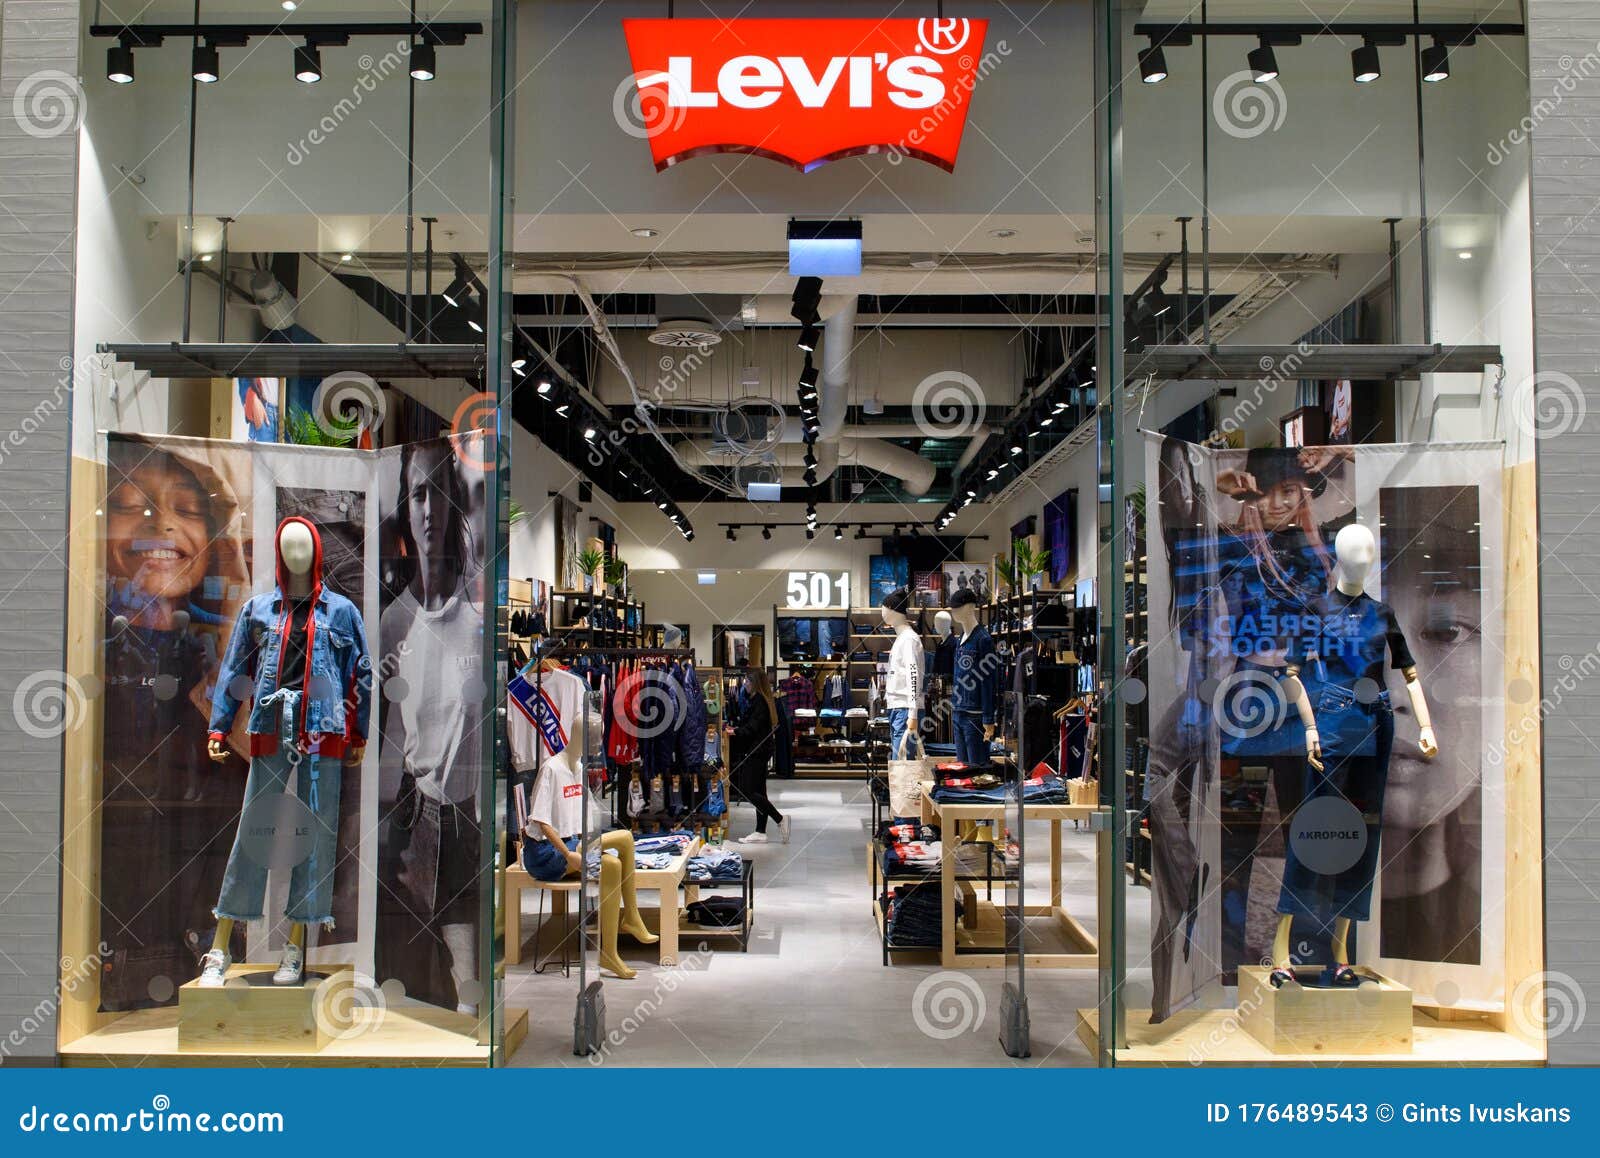 Levi`s brand logo on store editorial stock photo. Image of levi - 176489543